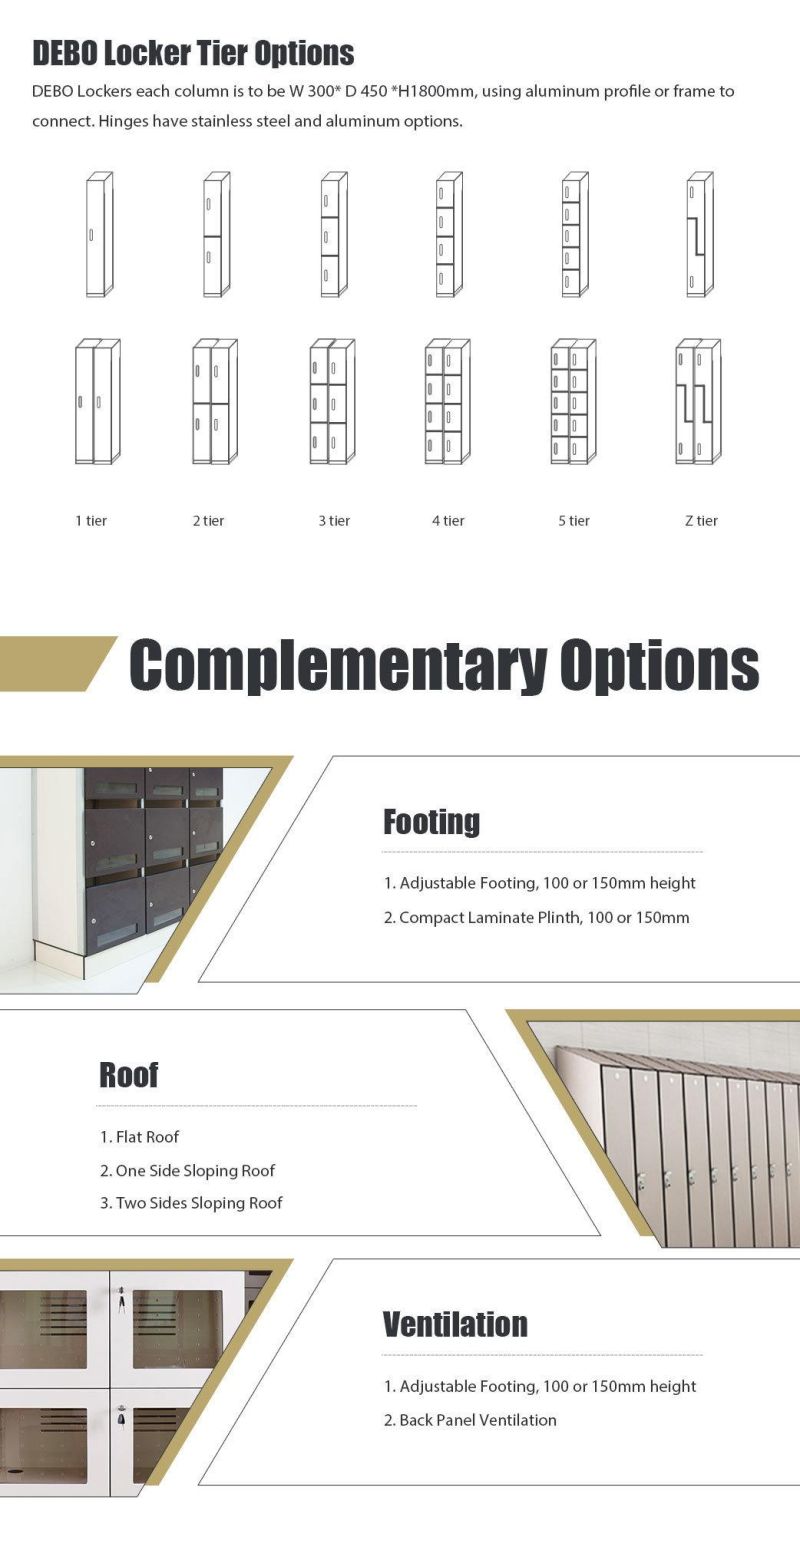 Modern Design 12mm HPL Compact Laminate Single Door Lockers Cabinet for Sport Center